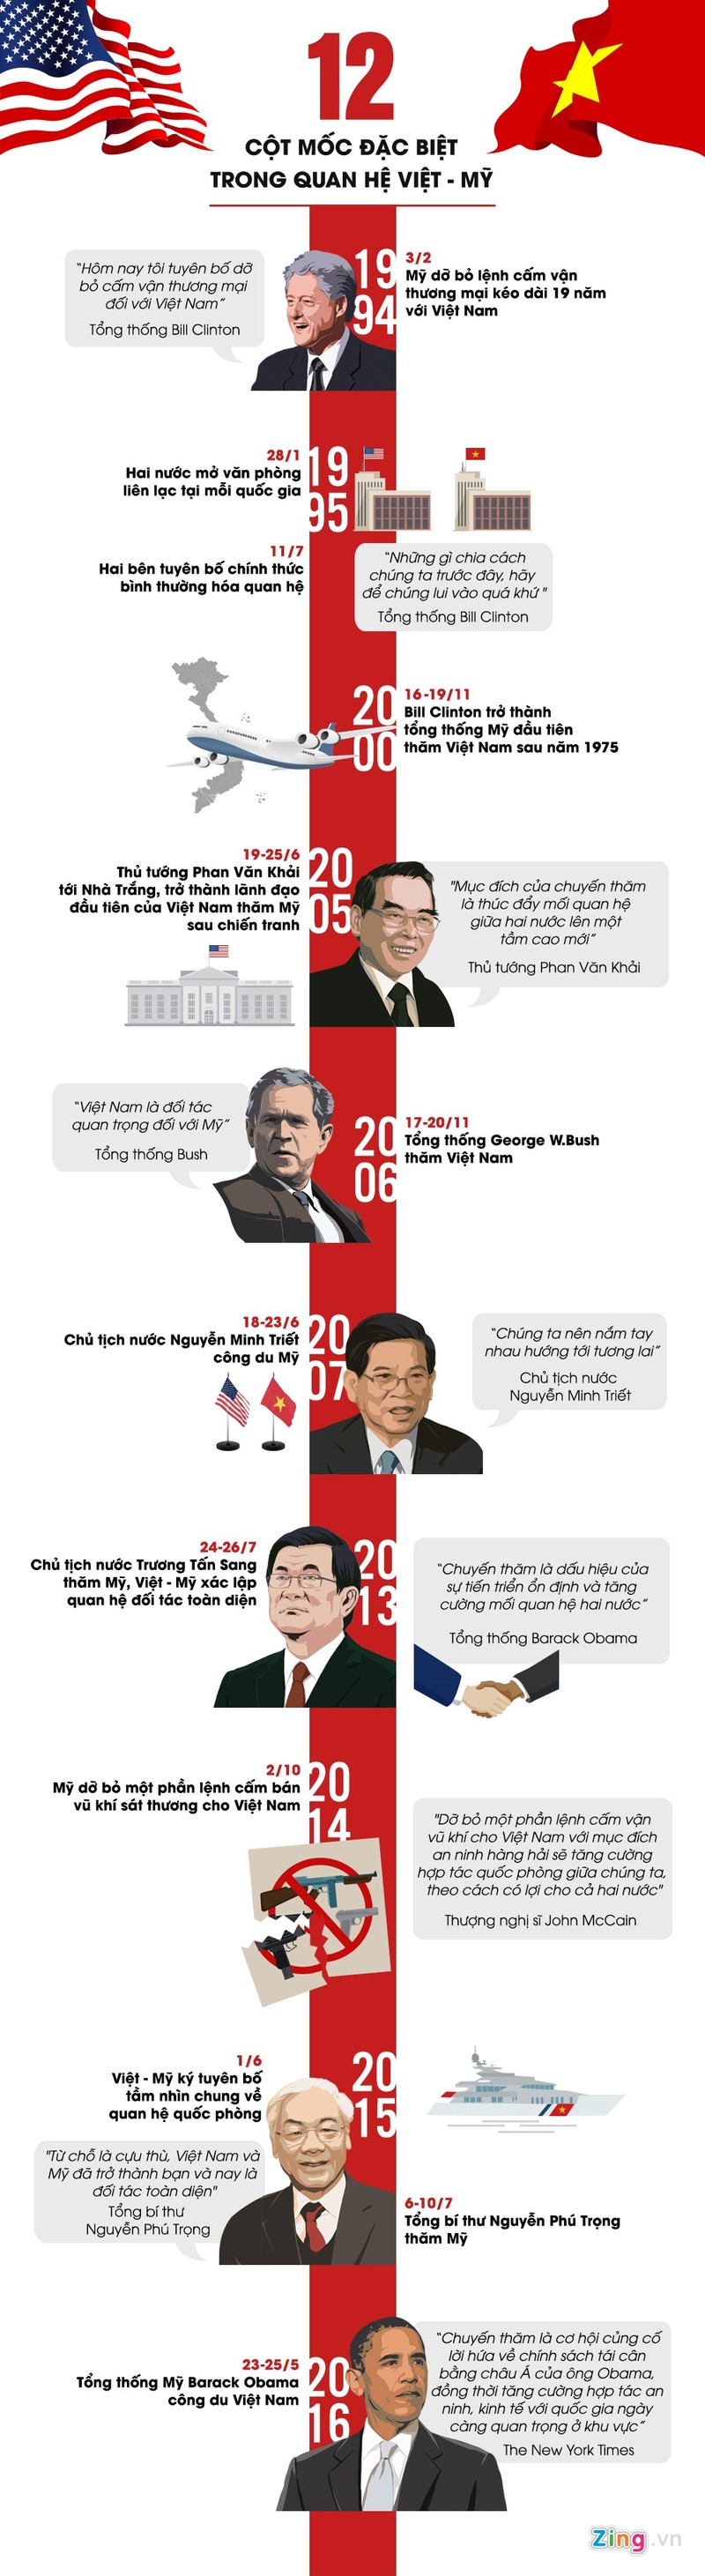 Infographic: 12 cot moc trong quan he Viet - My